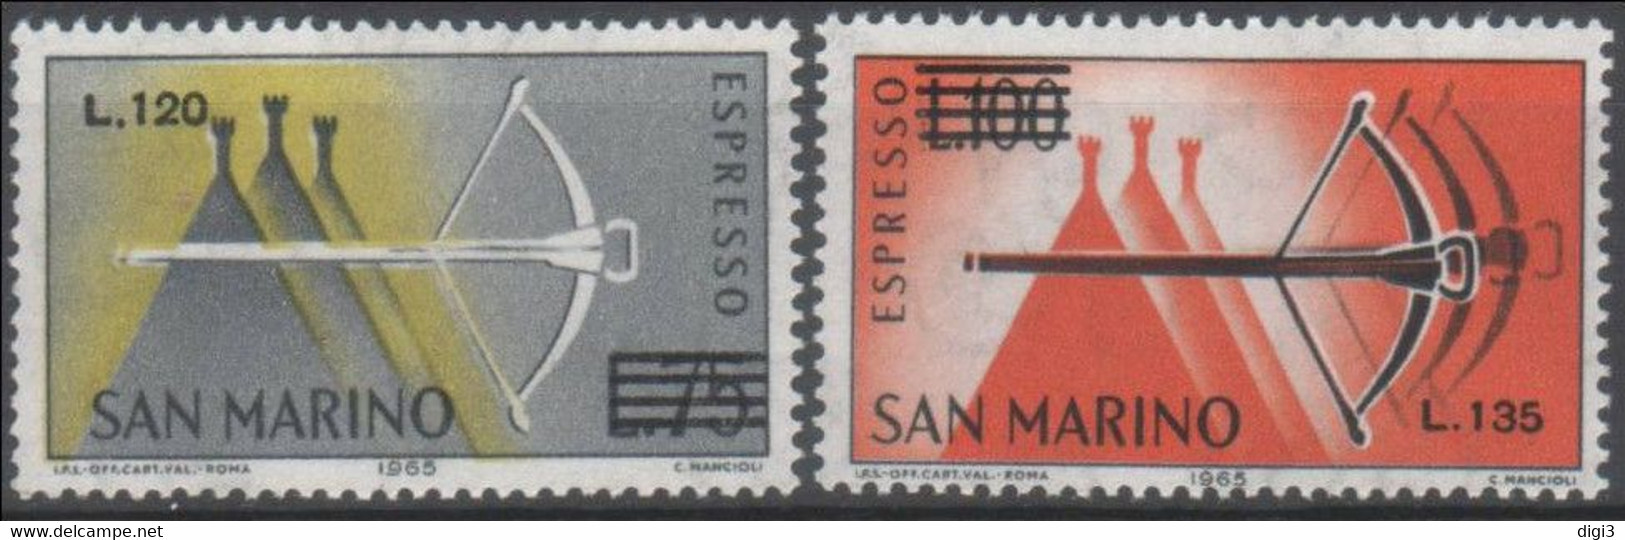 San Marino, 1965, Espressi, Francobolli Balestra Con Valori Soprastampati, Serie Completa, MNH** - Express Letter Stamps